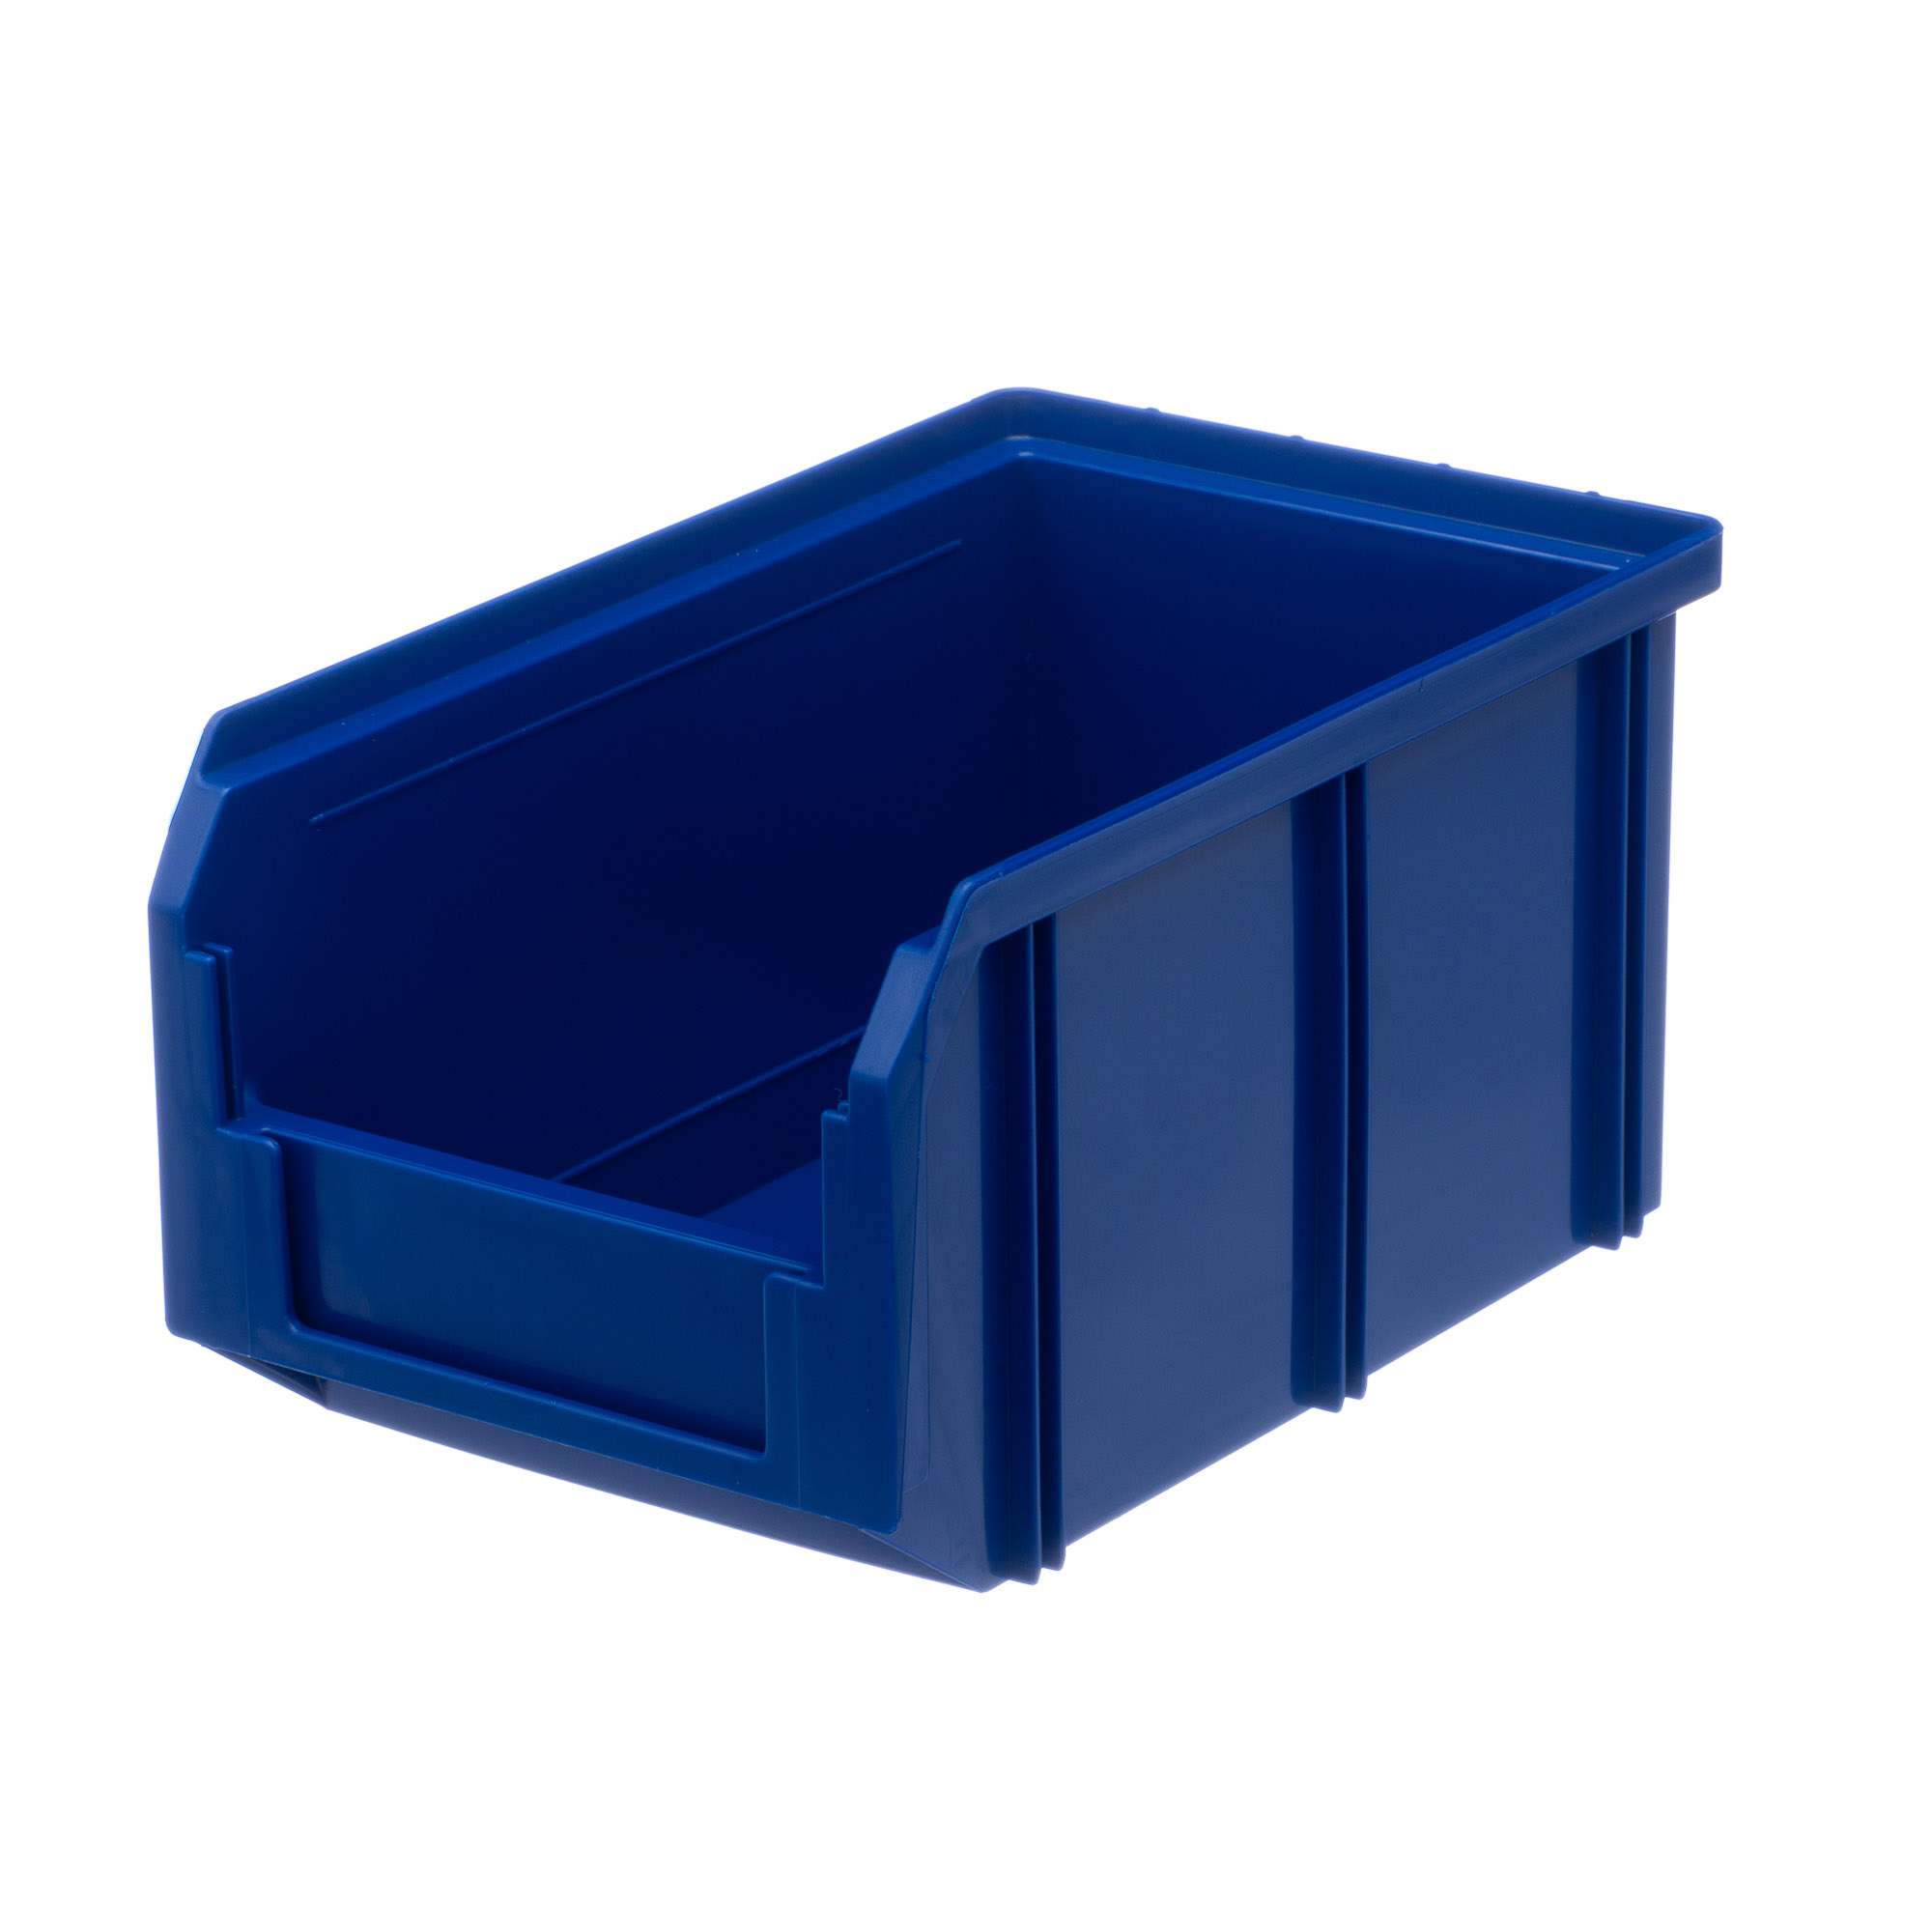 Пластиковый ящик Стелла-техник V-2-синий 234х149х120мм, 3,8 литра лоток для крепежа пластиковый fit 65695